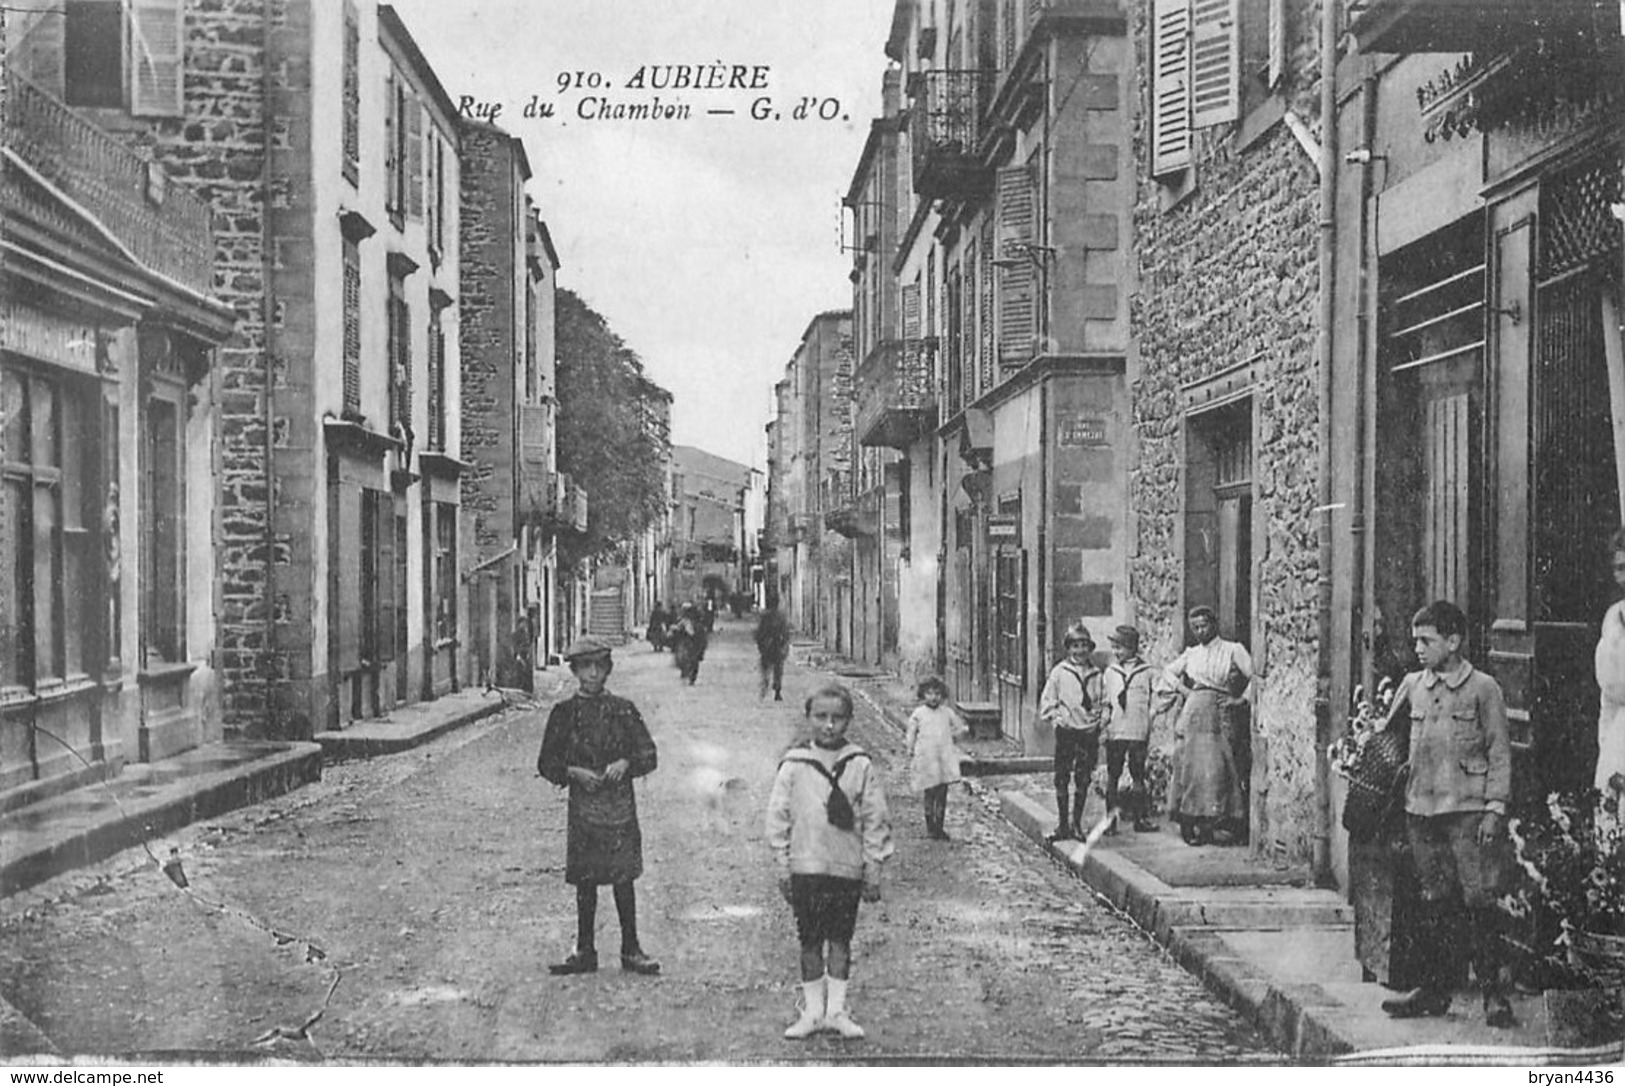 63 - AUBIERE - RUE DU CHAMBON ANIMEE - édit, G.d'O. N° 910. - Aubiere